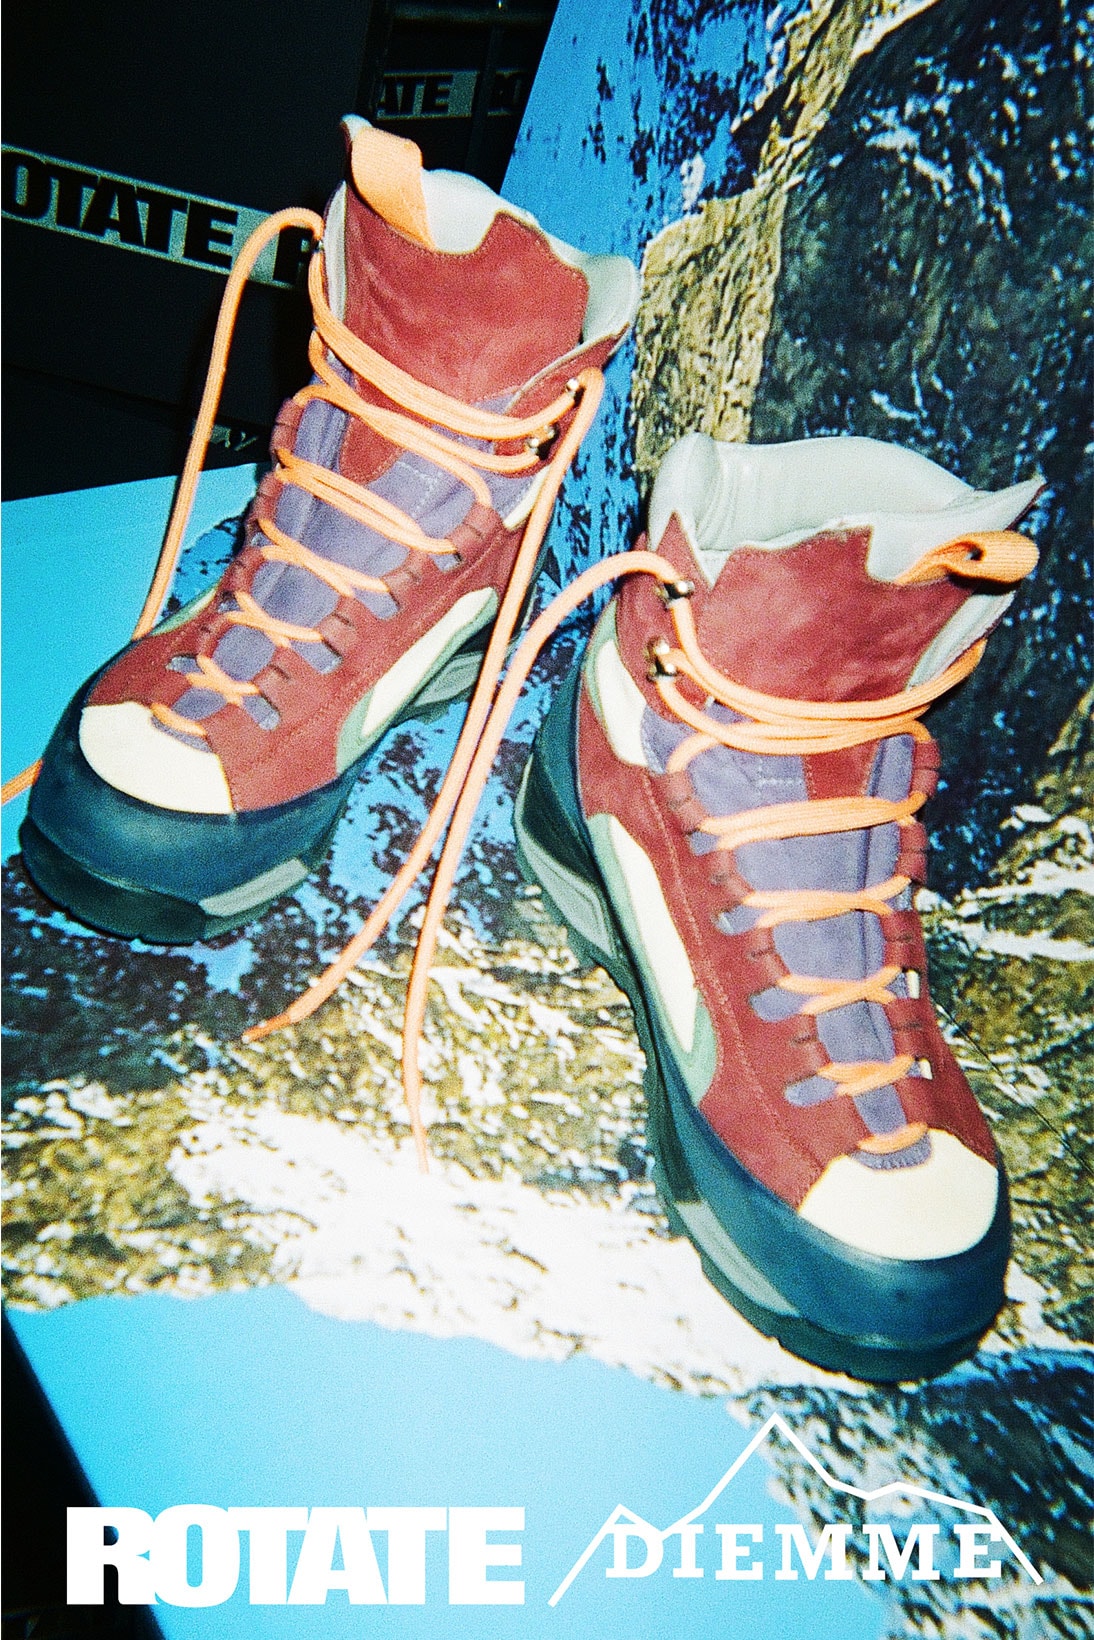 Rotate Sunday Diemme Hiking Boots Collaboration Closeup Details